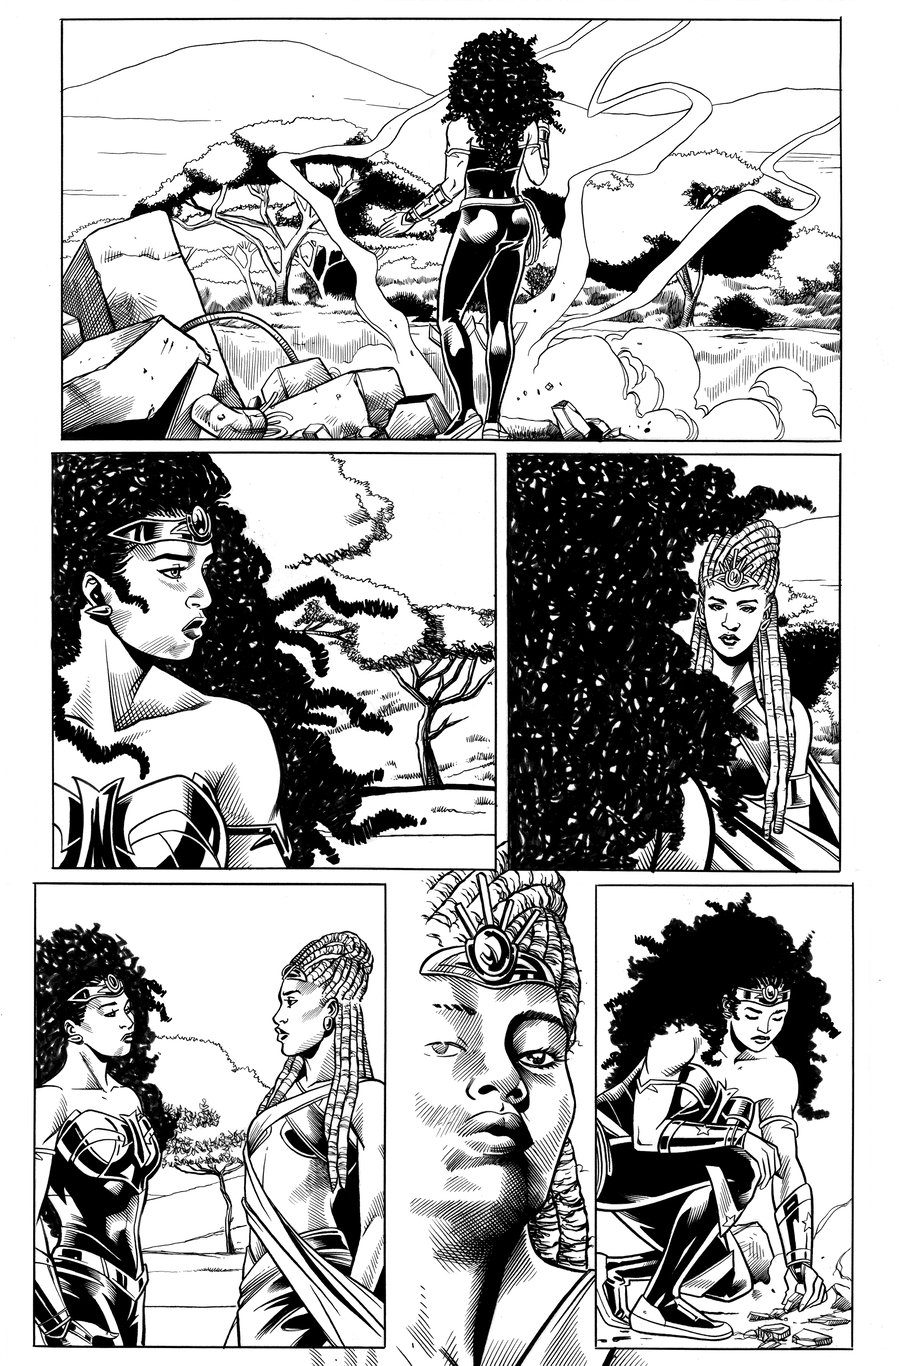 Image of Immortal Wonder Woman: Nubia (2021) #2 PG 38